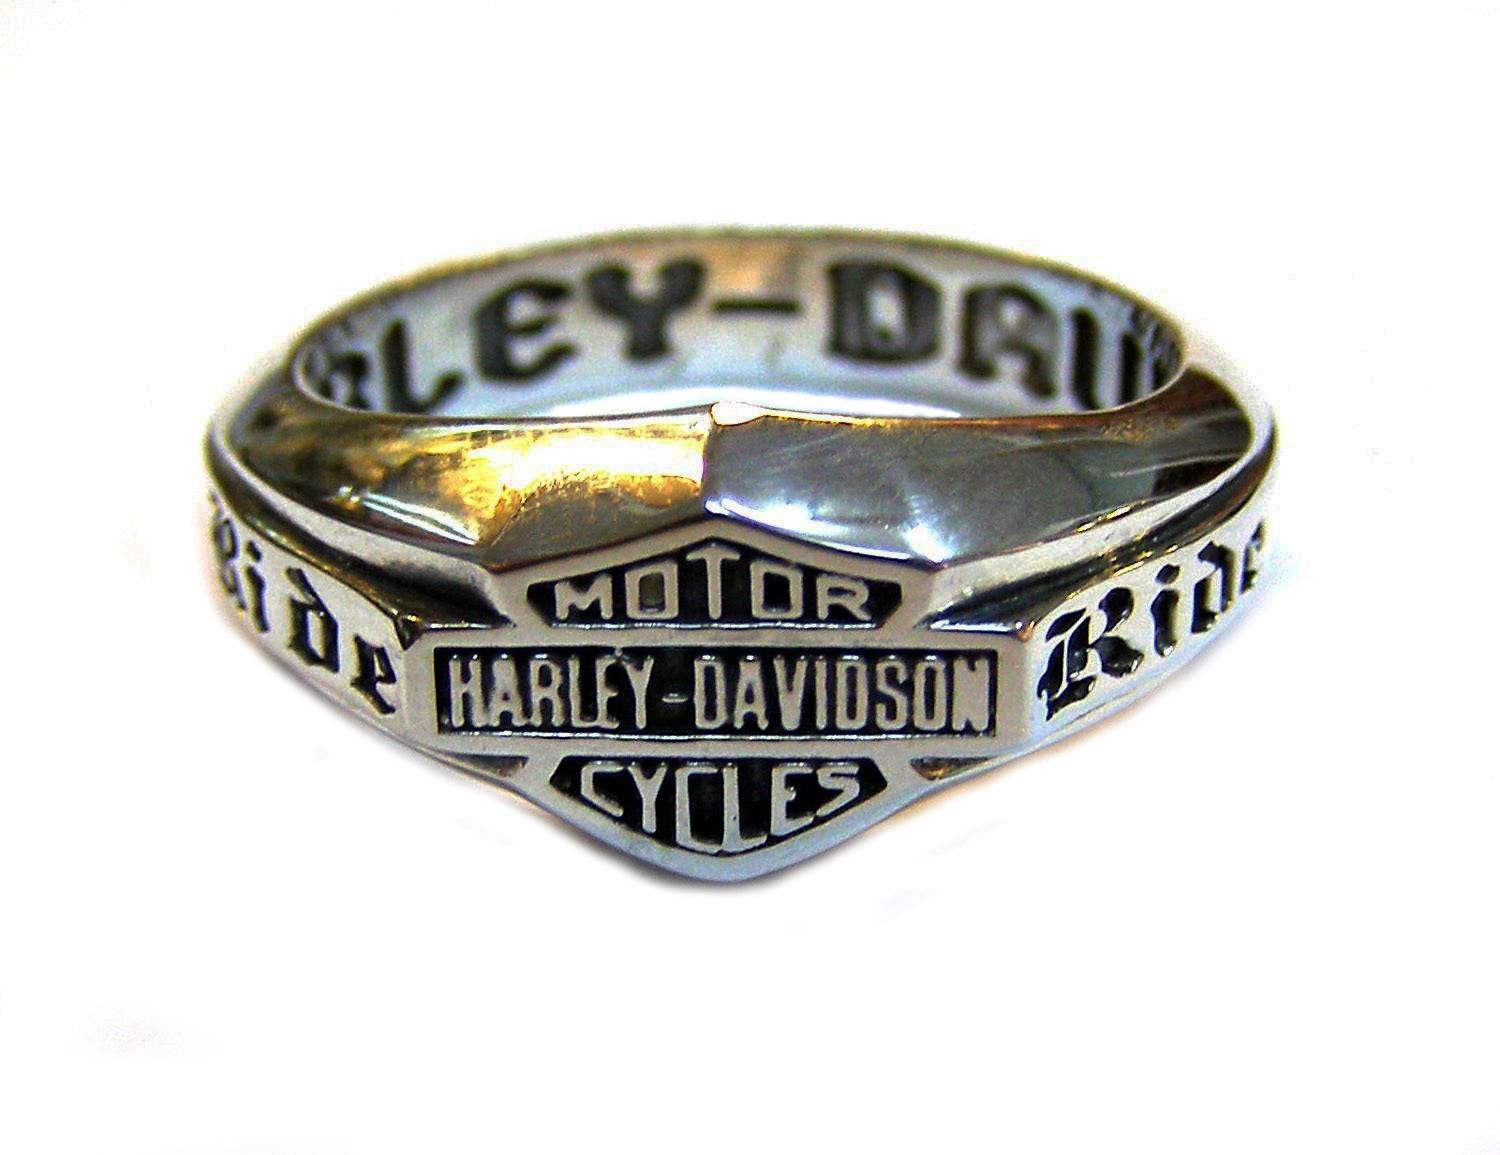 NEW Men's Harley Davidson Stainless Steel Moto Biker Ring Size 12 - Rings |  Facebook Marketplace | Facebook